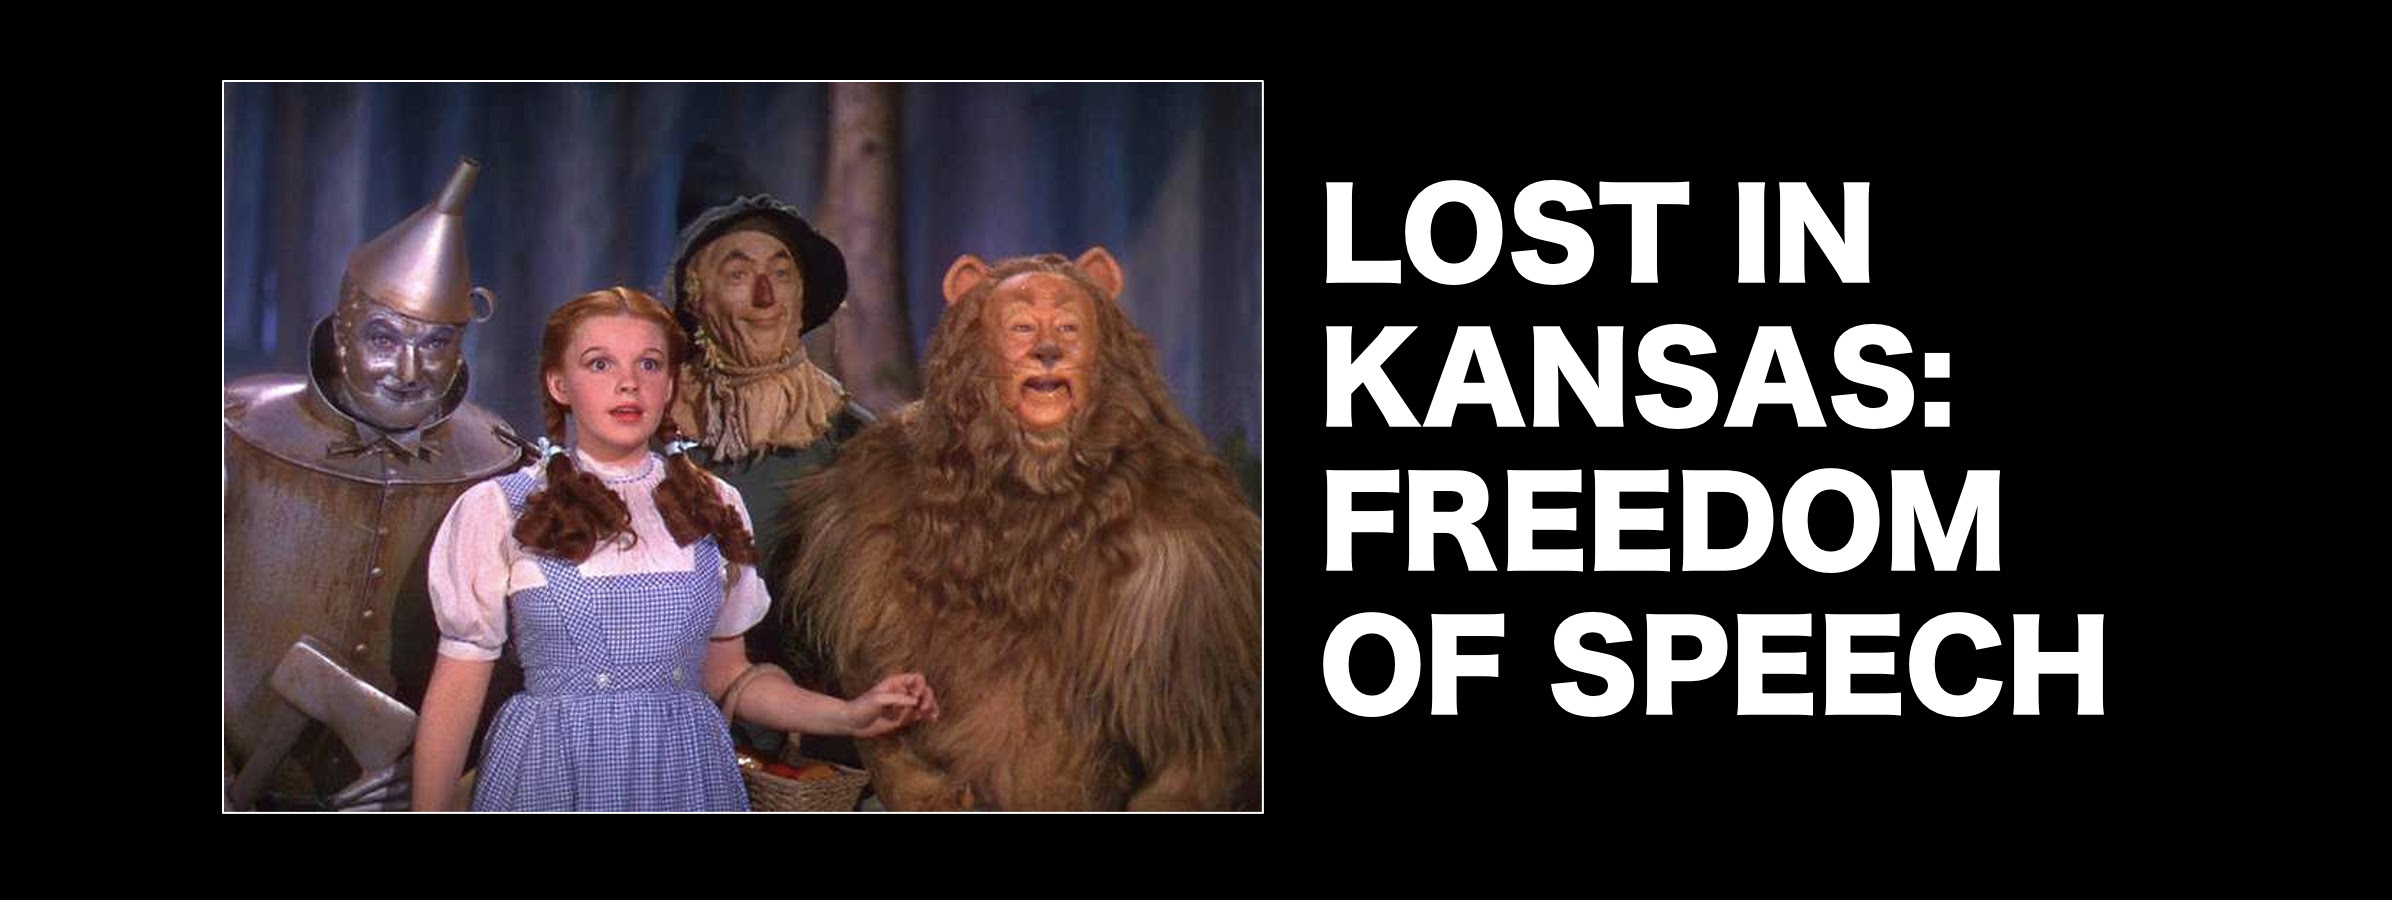 Lost in Kansas - Freedom of Speech as police raid newspaper office